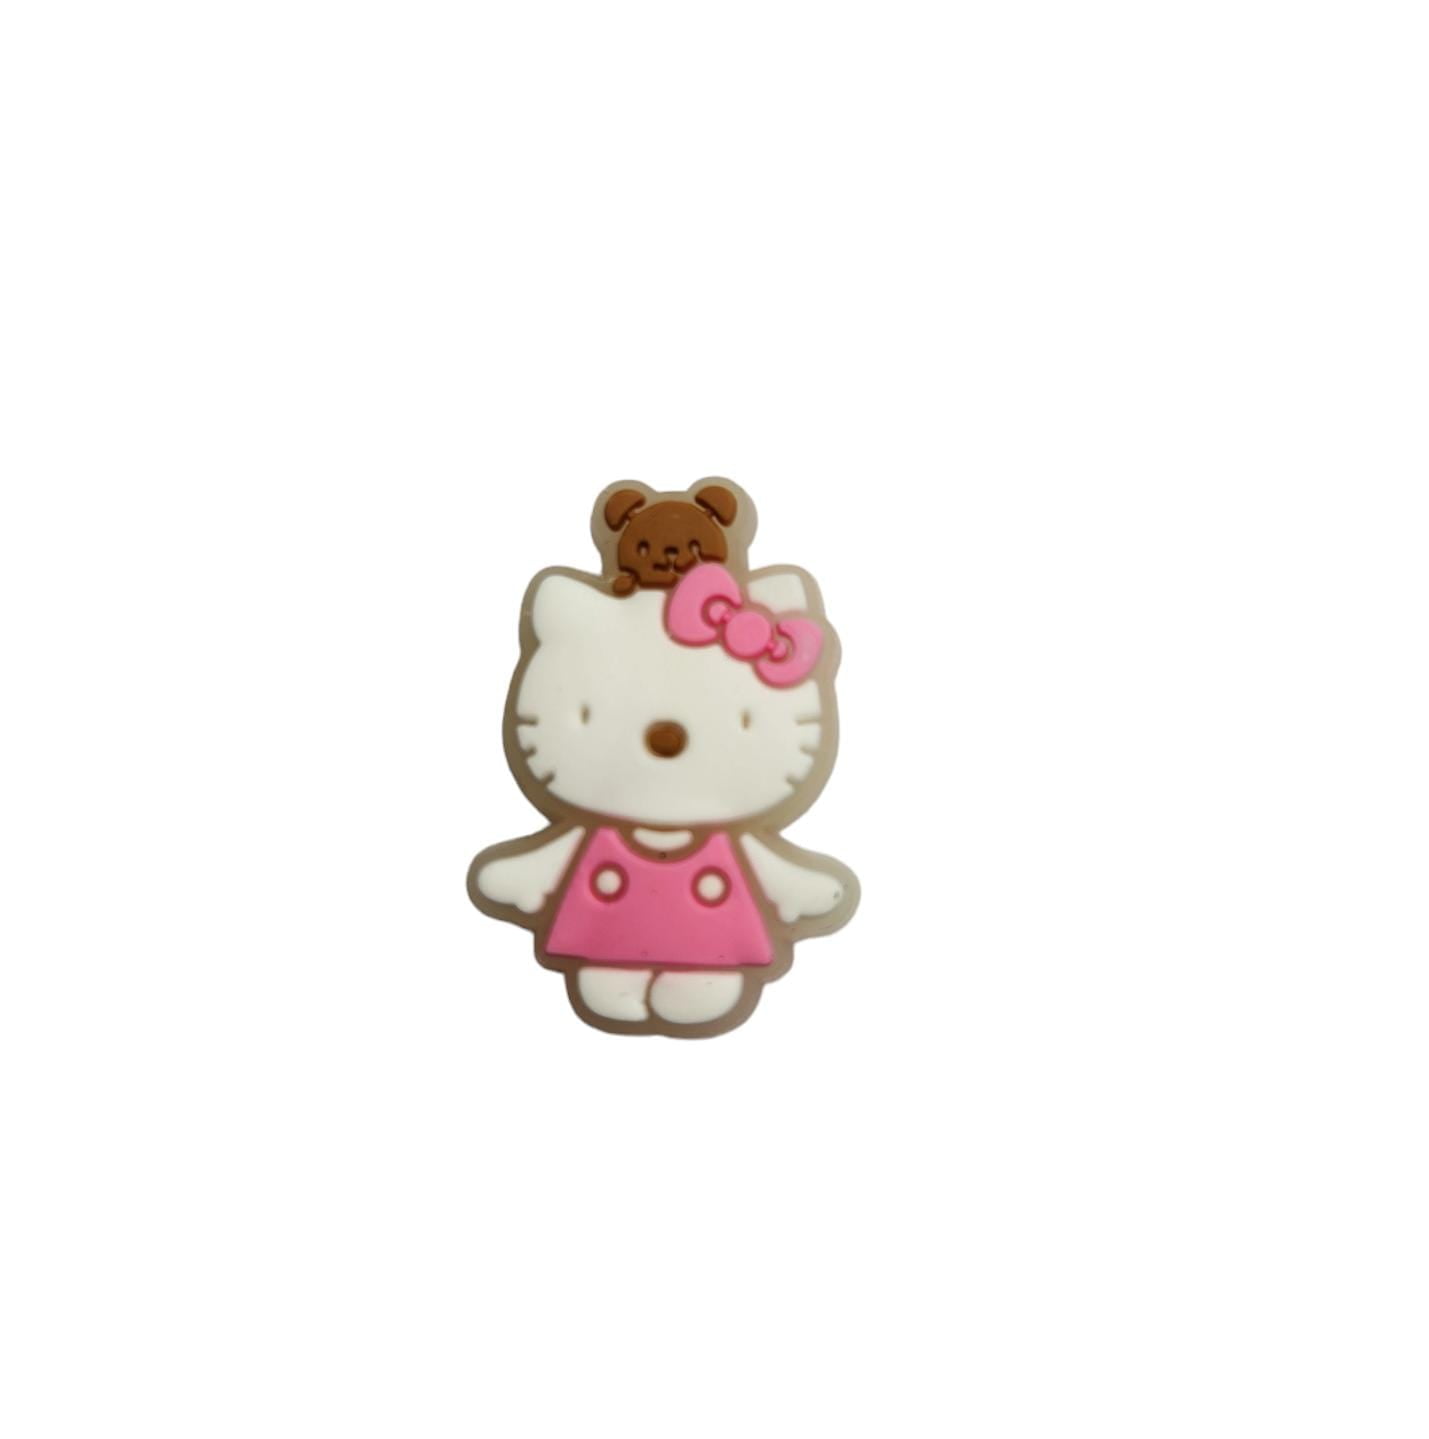 Aplique de Silicone Hello Kitty com urso